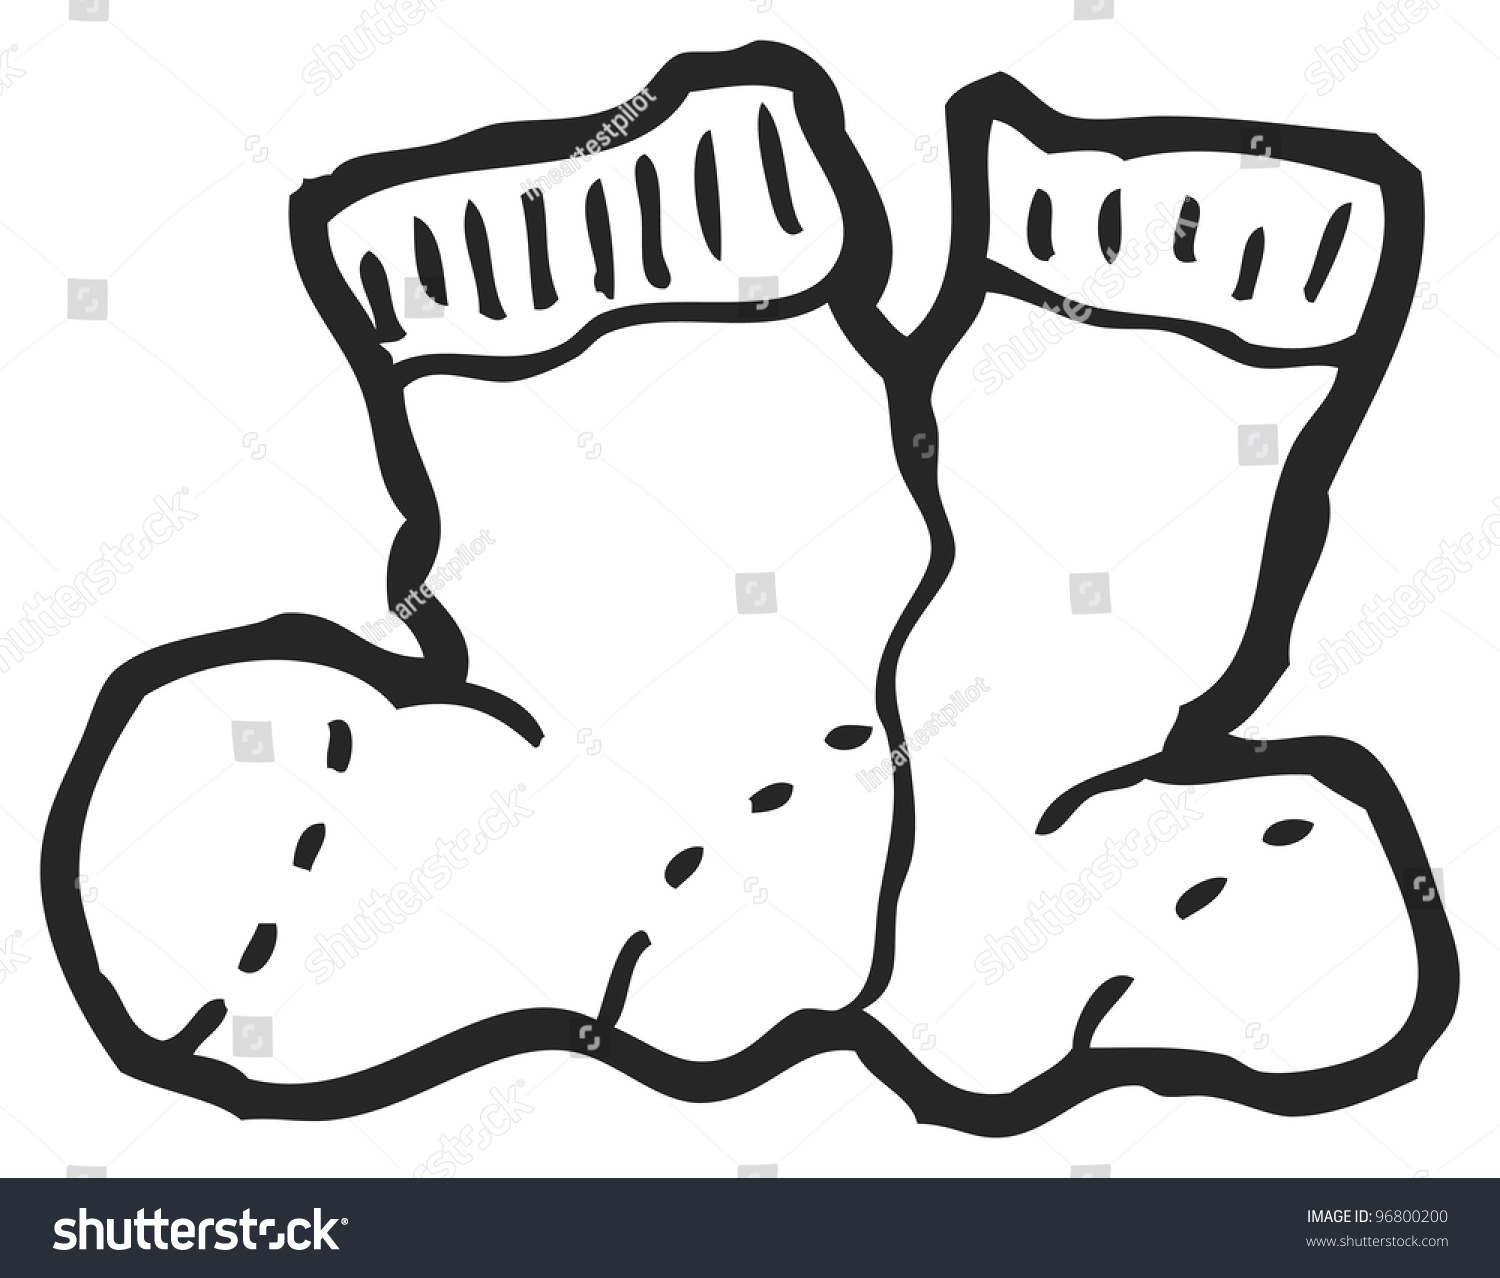 Cartoon Socks Stock Photo 96800200 : Shutterstock